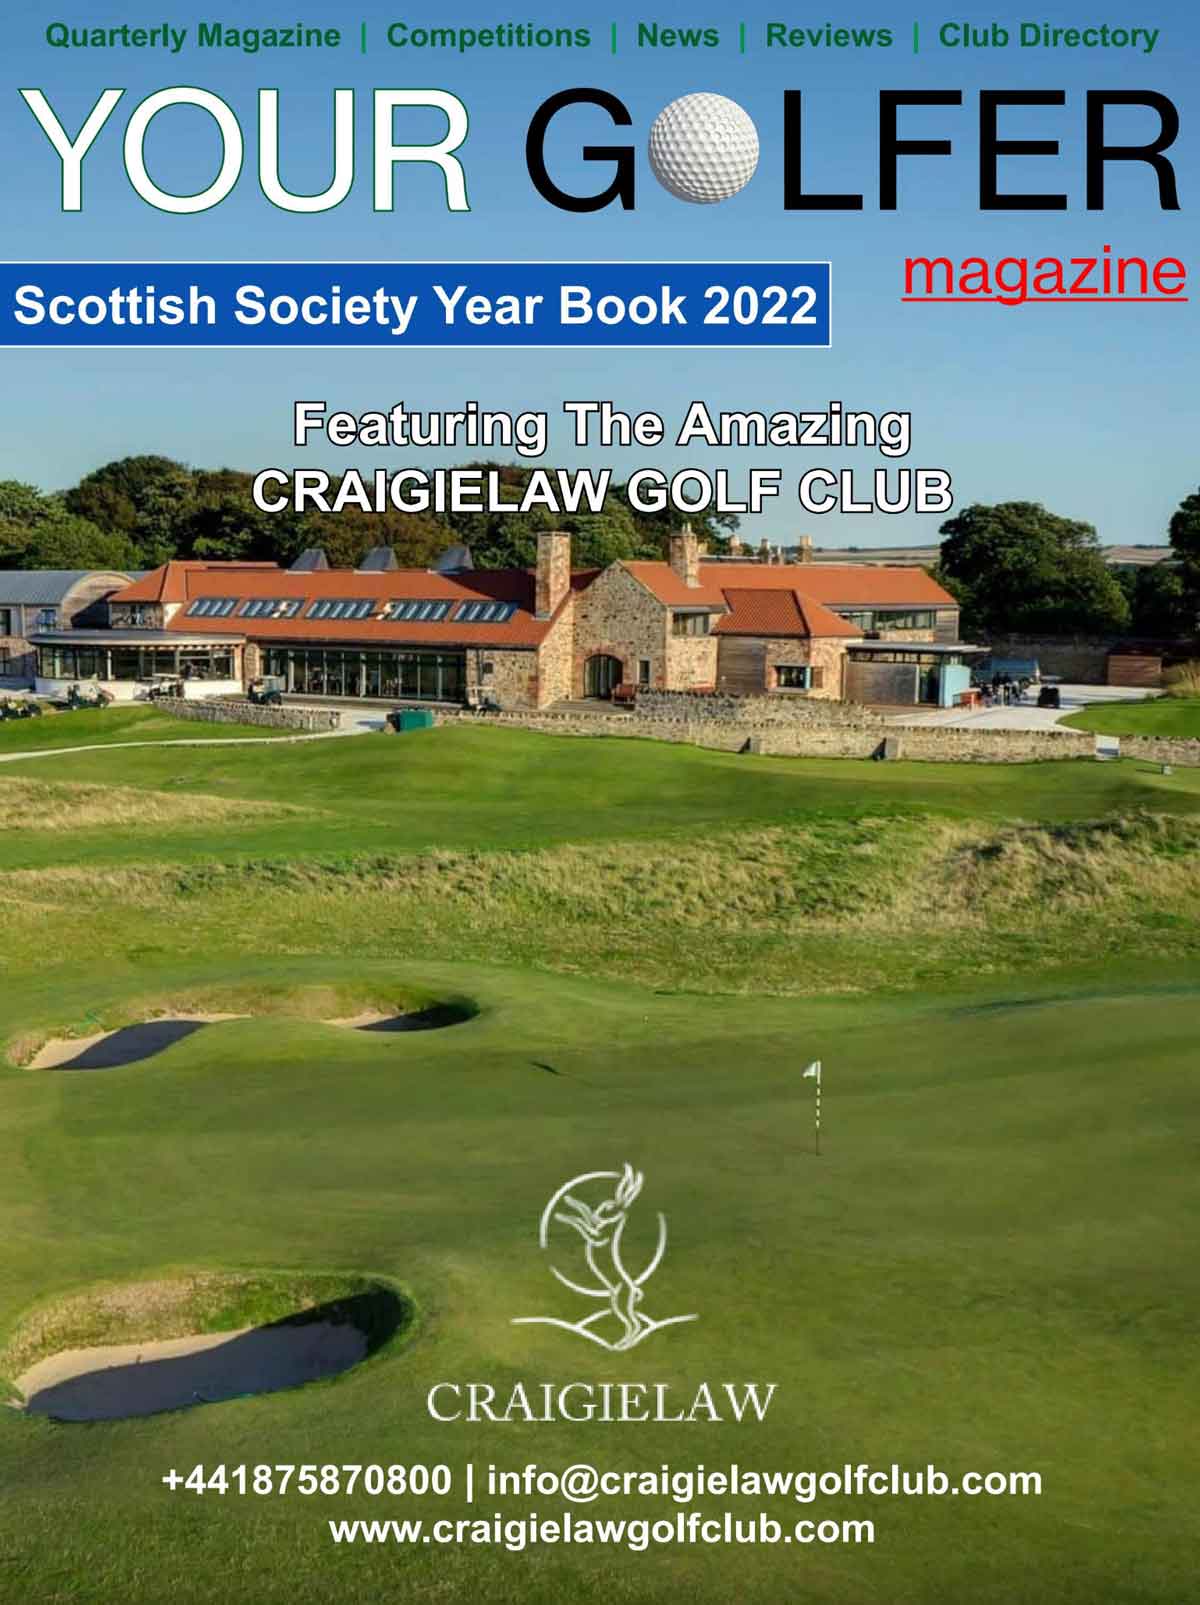 Scottish Yearbook 2022 from Your Golfer Magazine